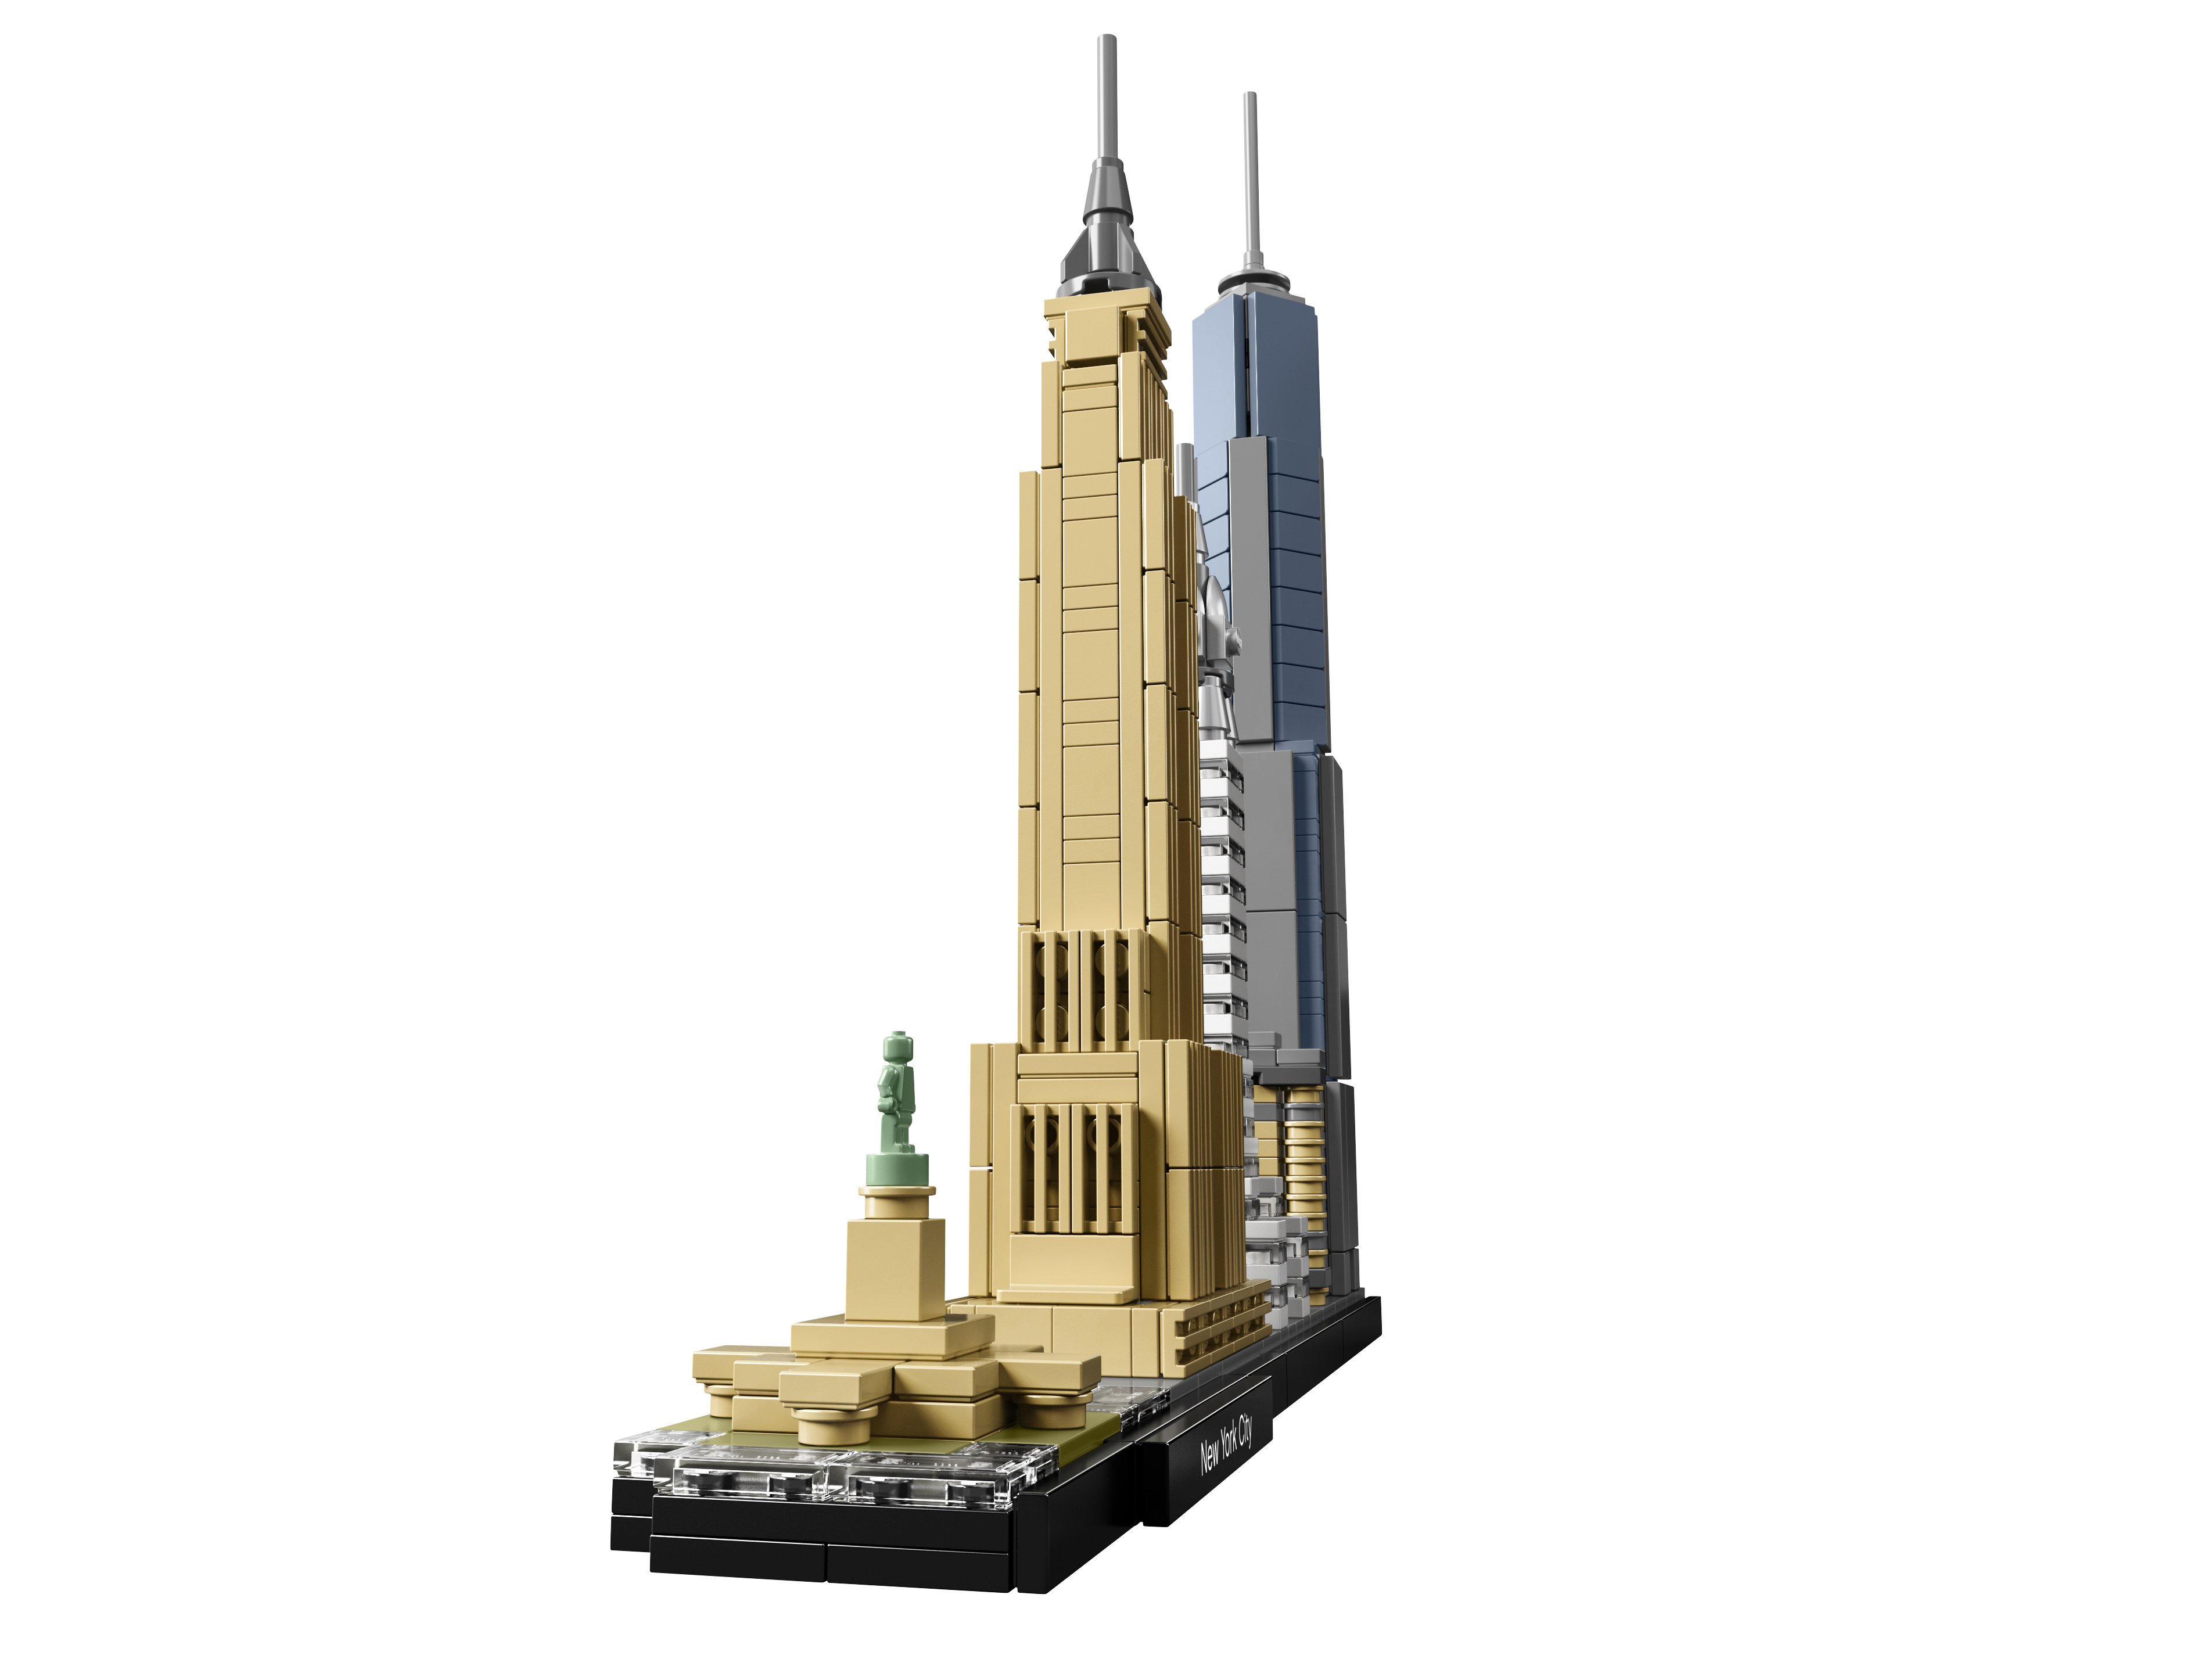 Lego Architecture 21028 Нью-Йорк